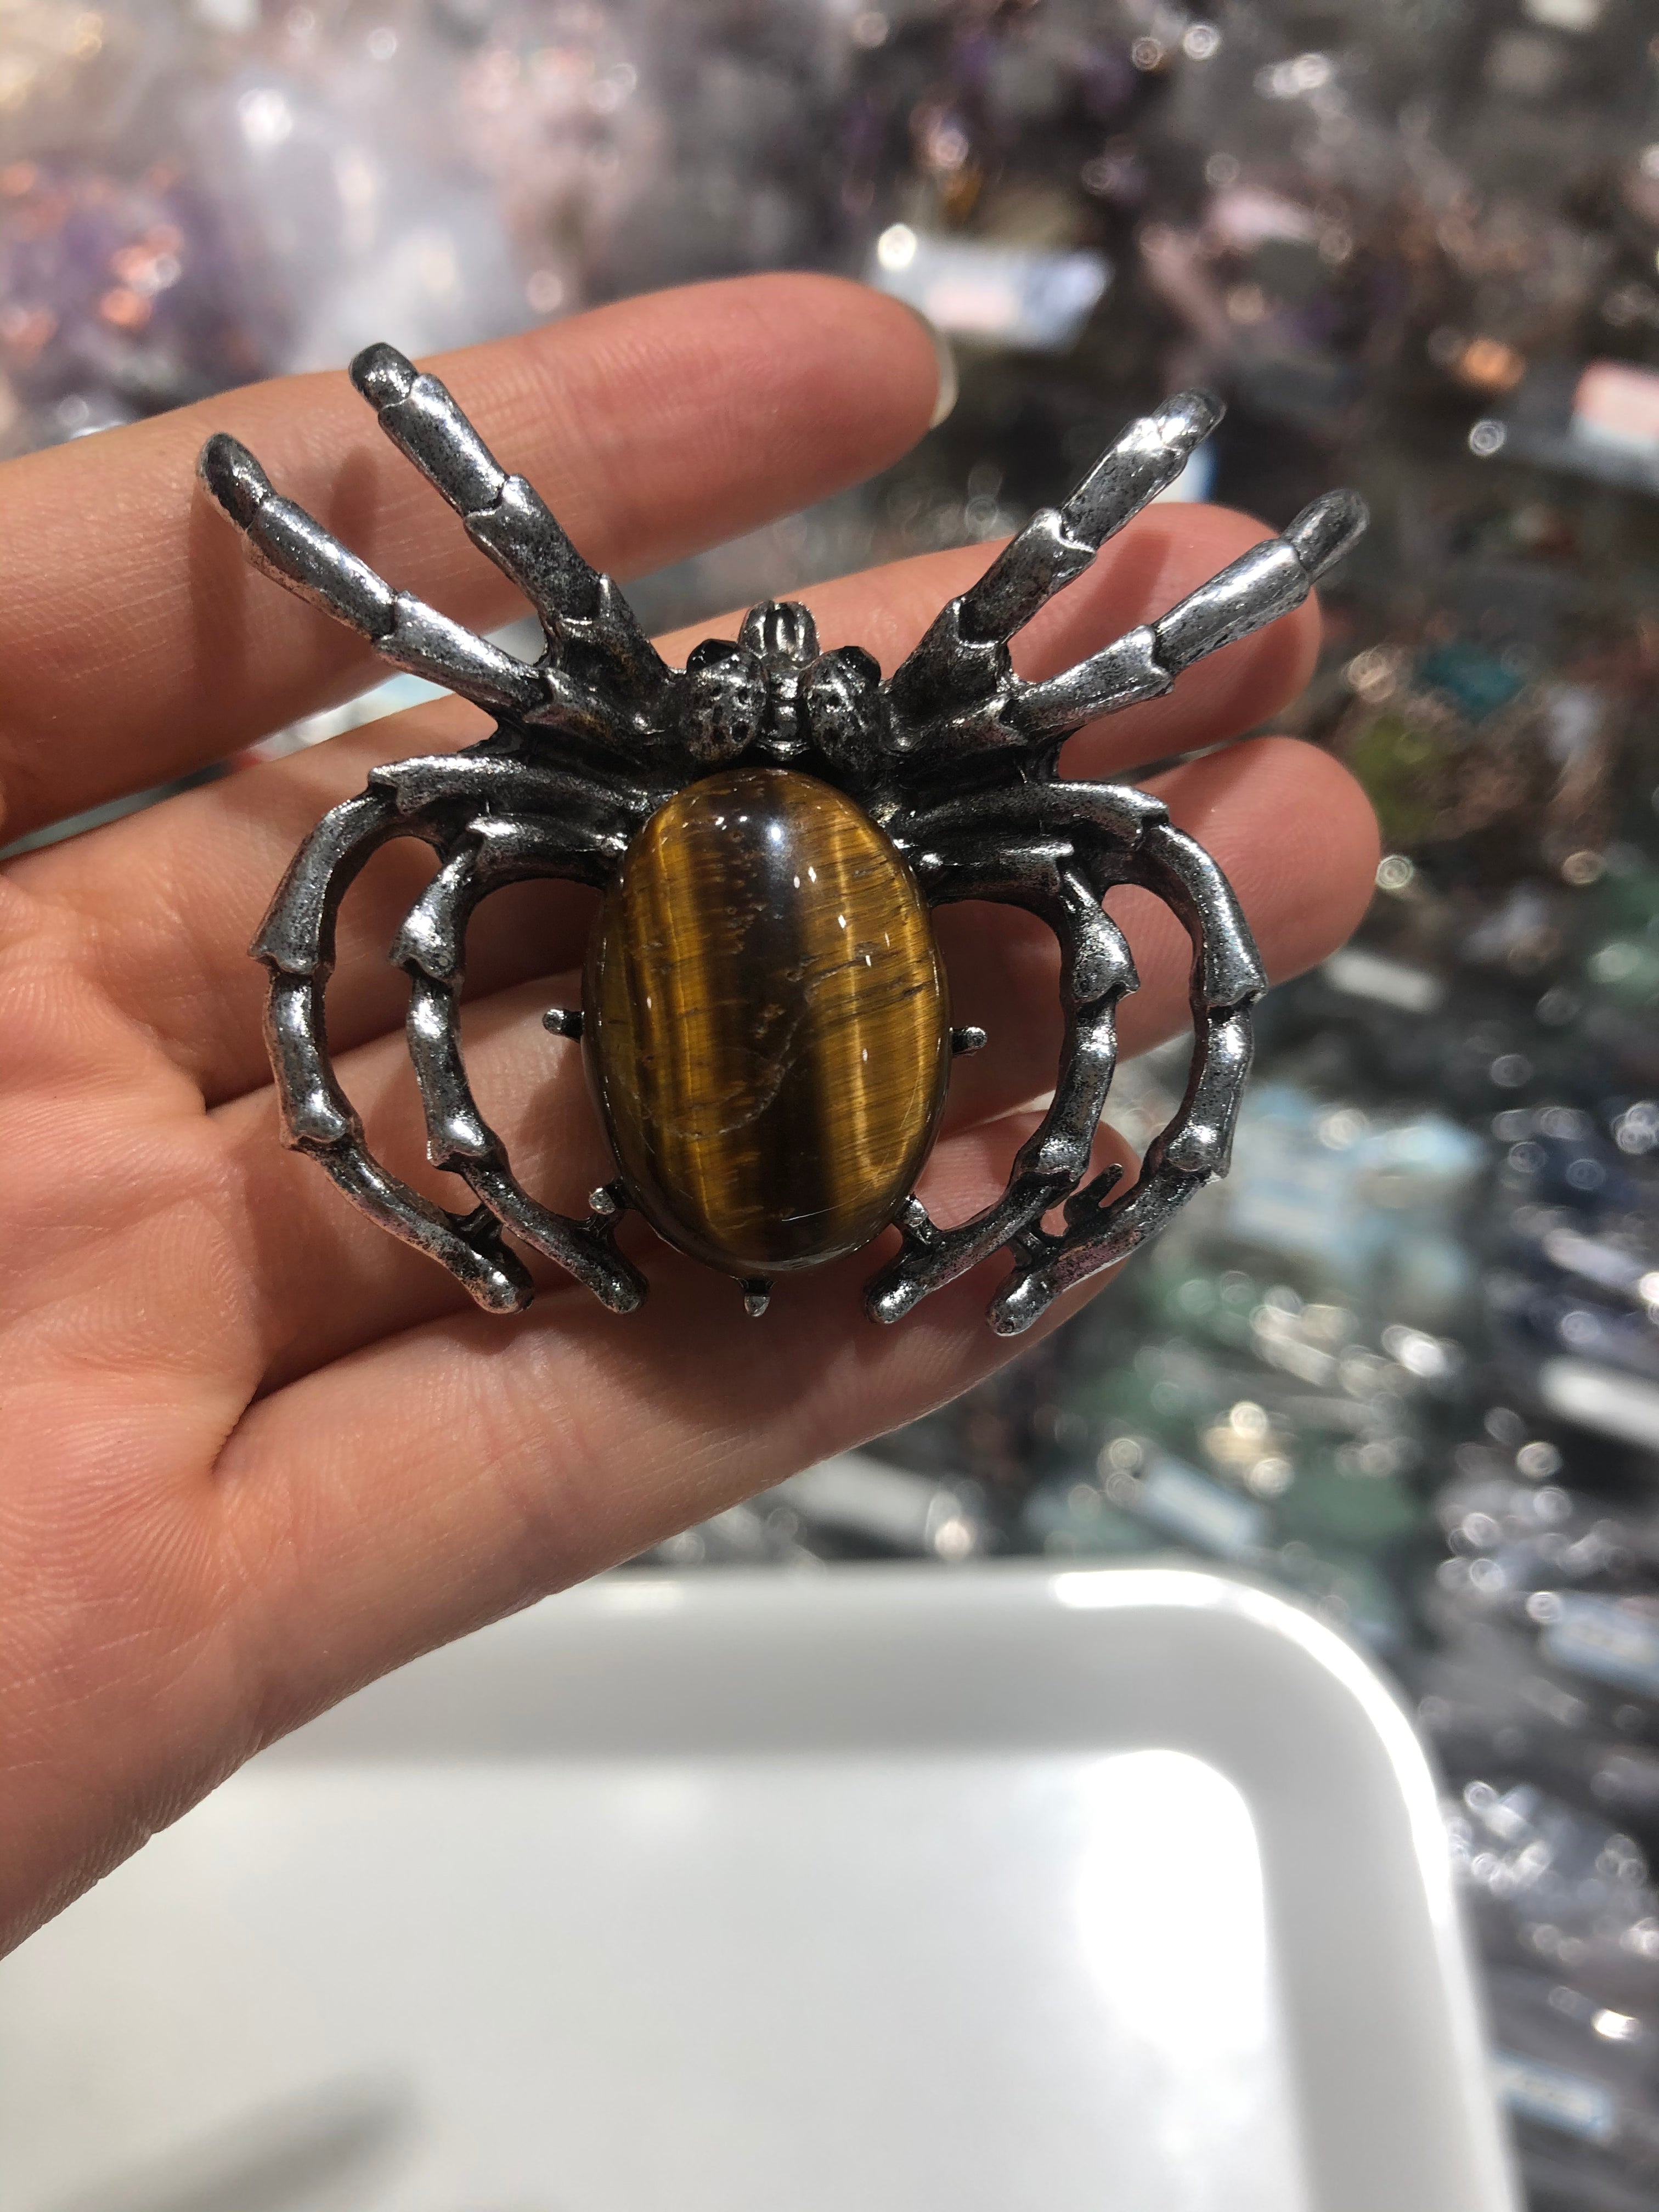 crystal scorpion/spiderpendant